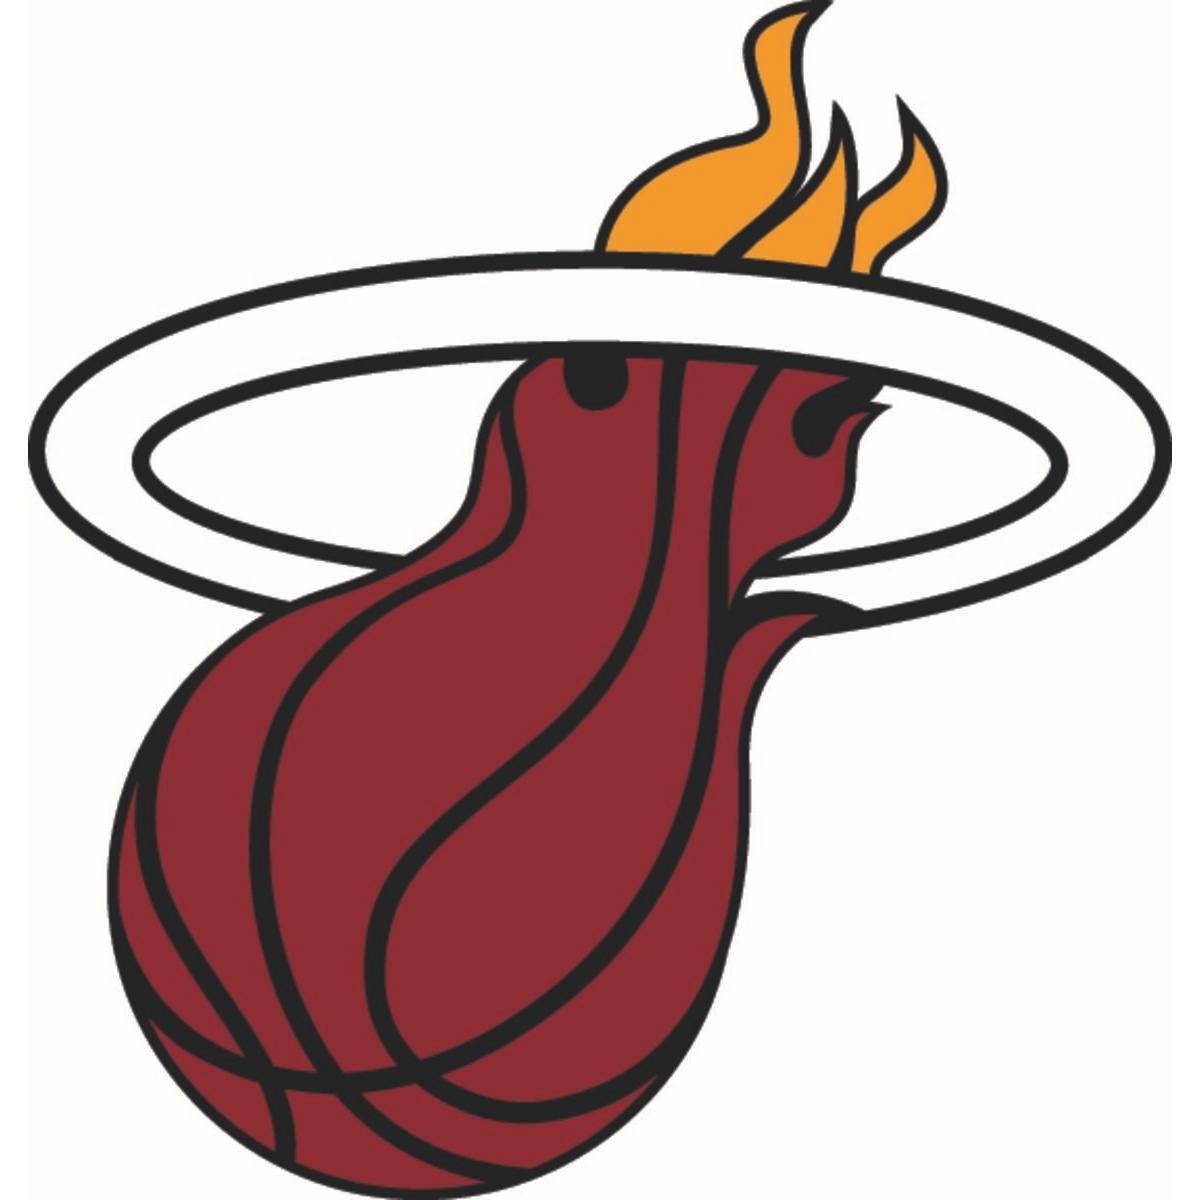 Ballons de basket NBA Team Alliance Miami Heat